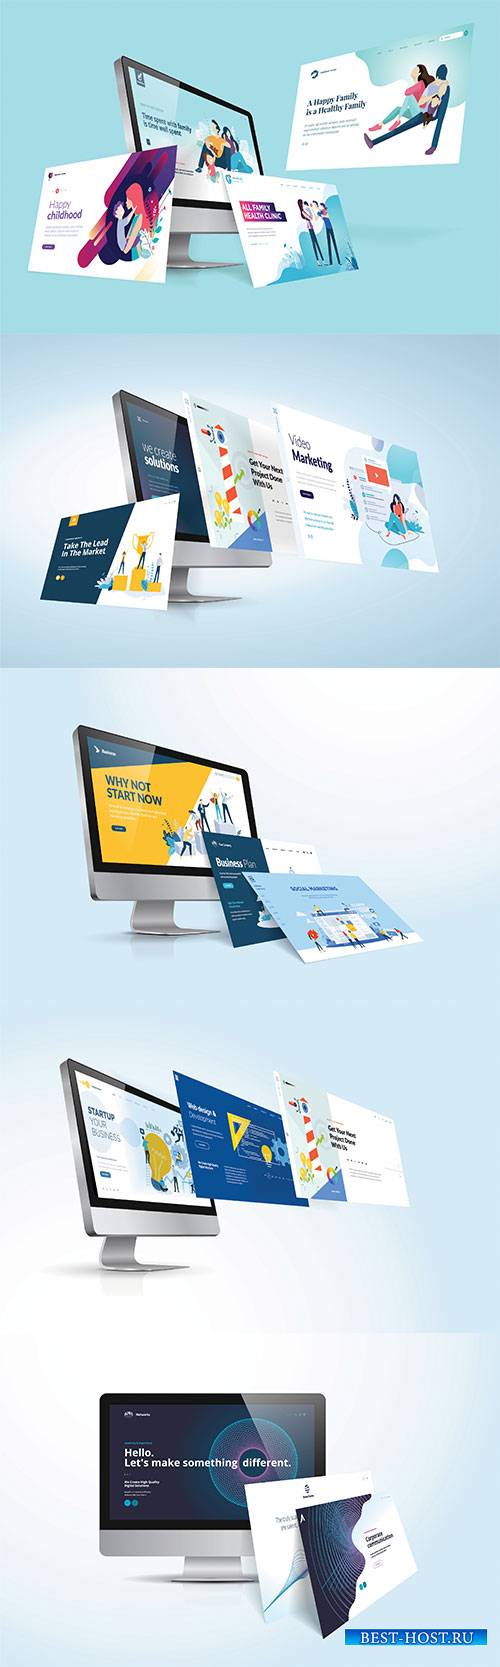 Vector illustration concept of website design and development